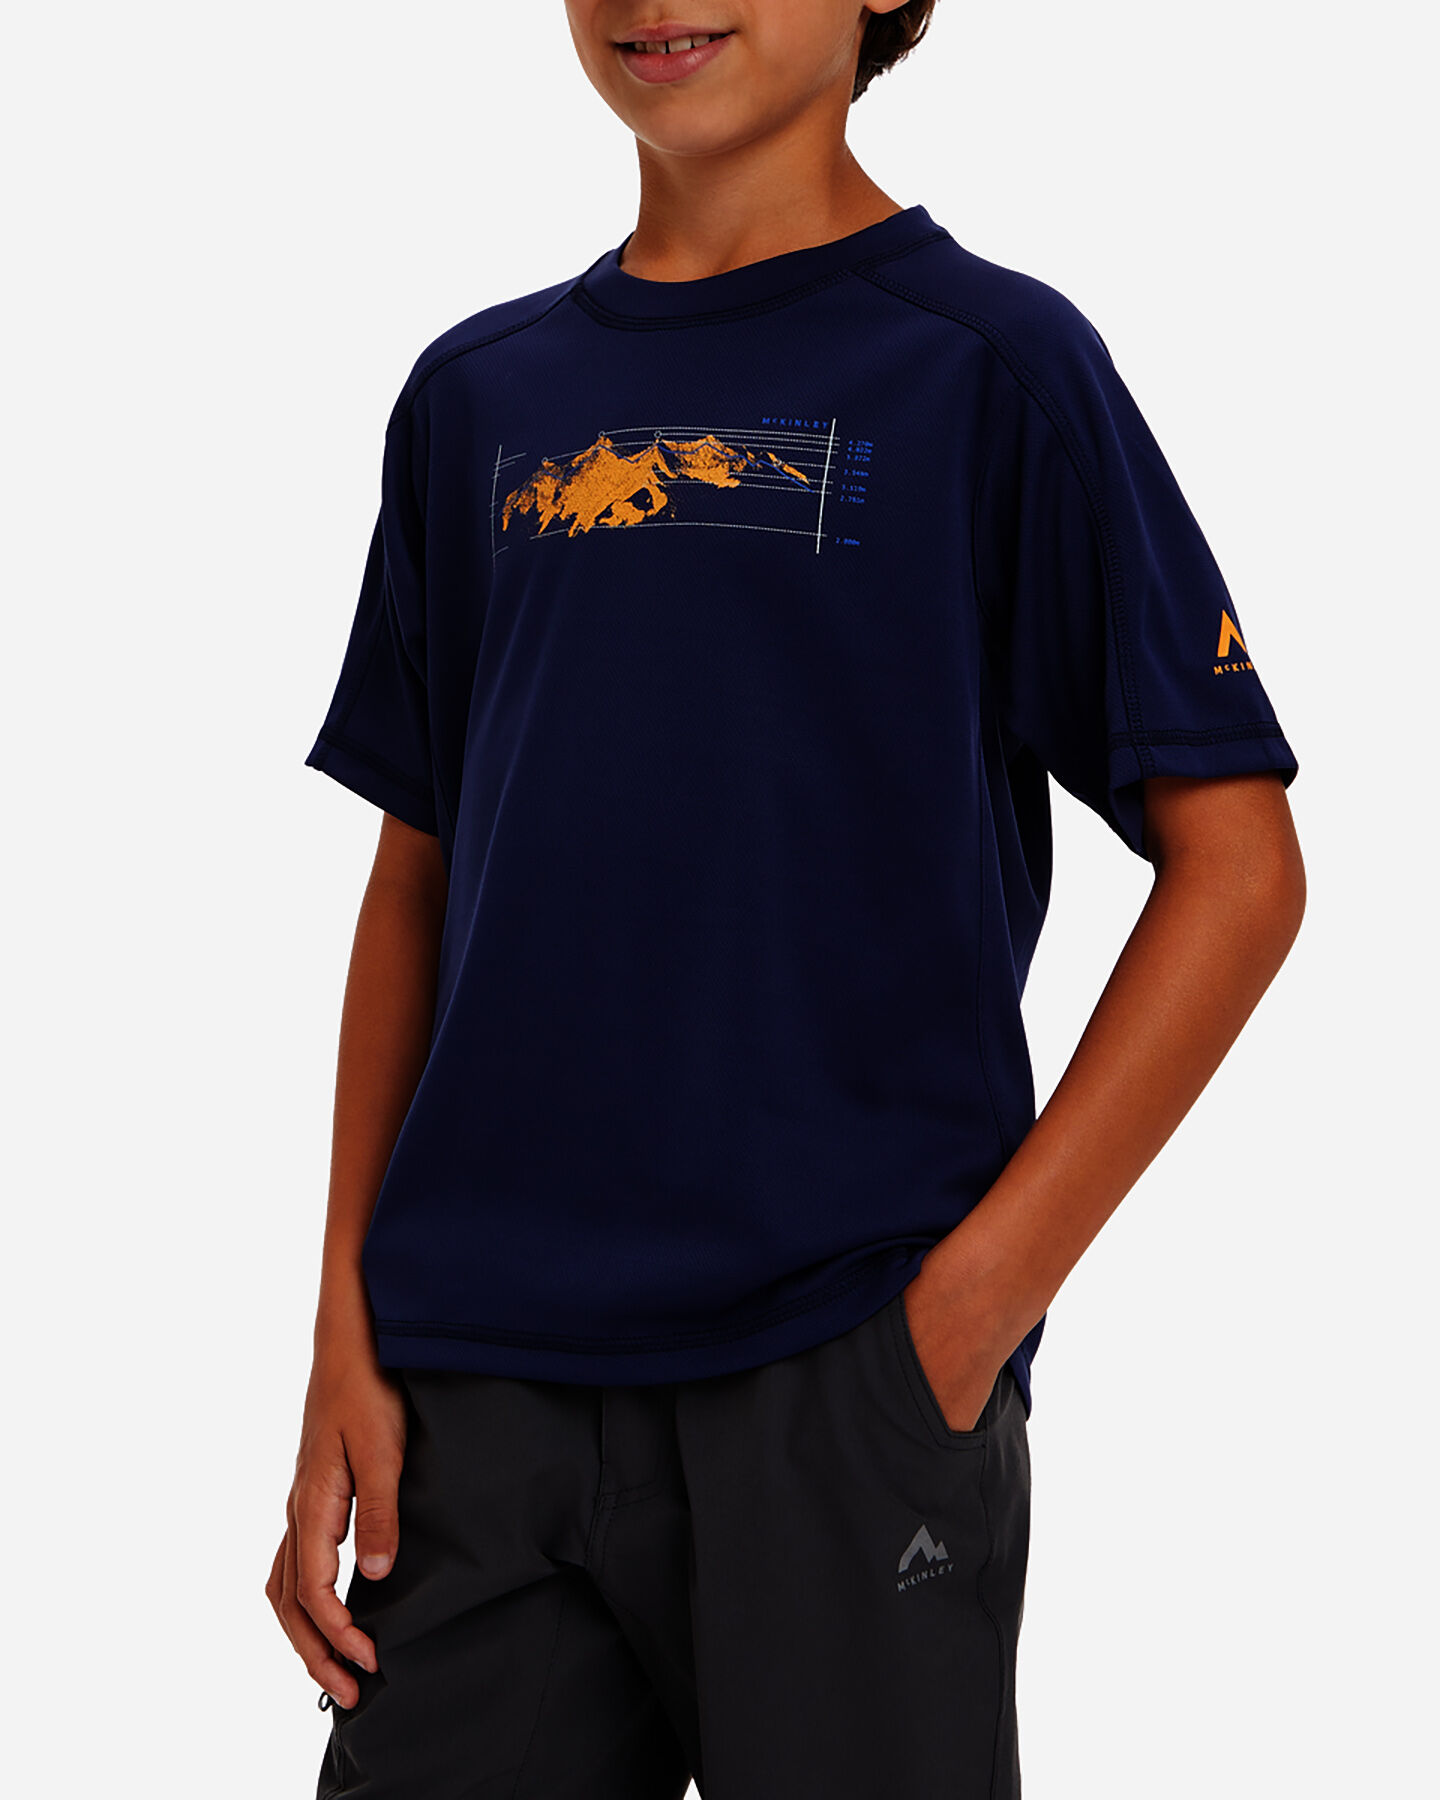  T-Shirt MCKINLEY CORMA III JR S5511150|518|128 scatto 3